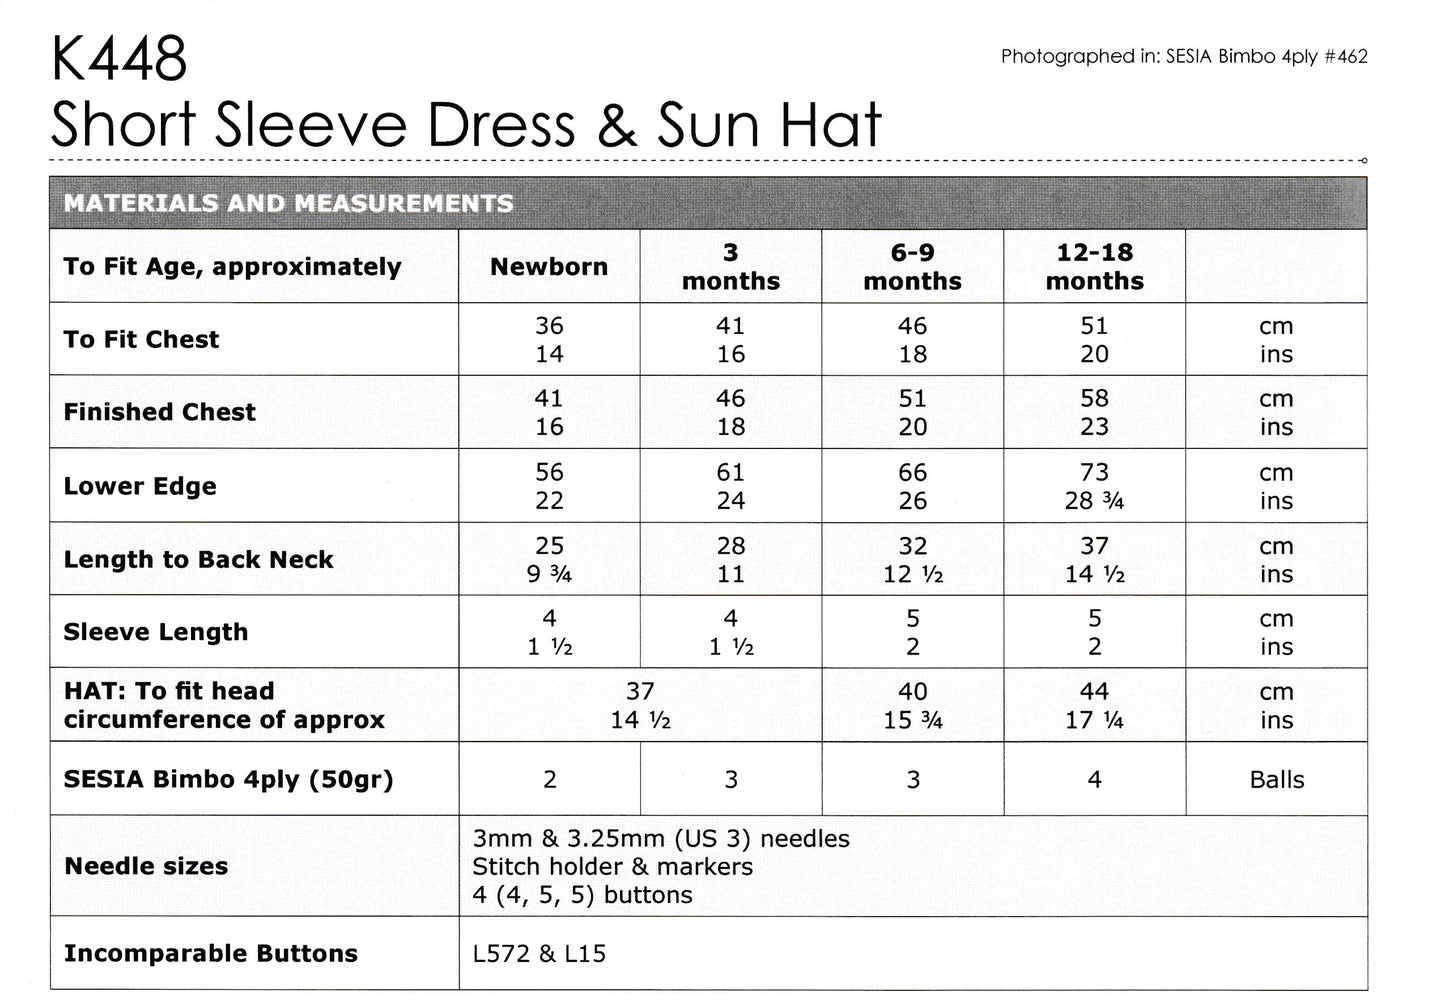 Pattern - Sesia - Newborn to 18 months - Short Sleeve Dress & Sun Hat K448